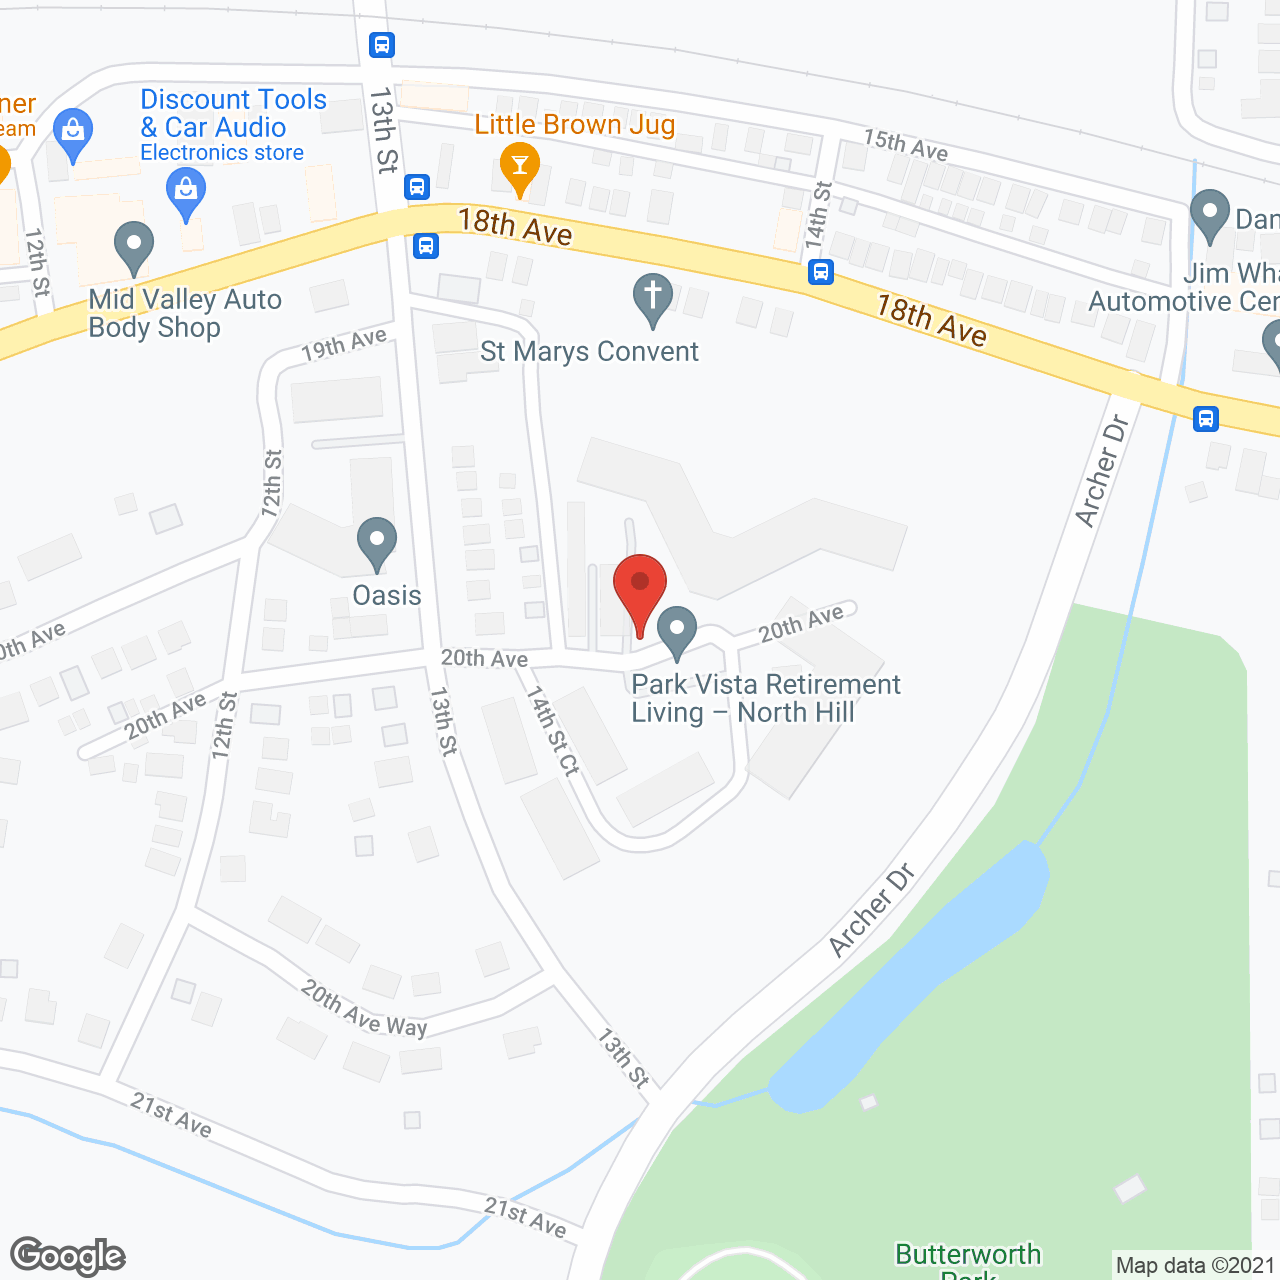 Park Vista -North Hill in google map